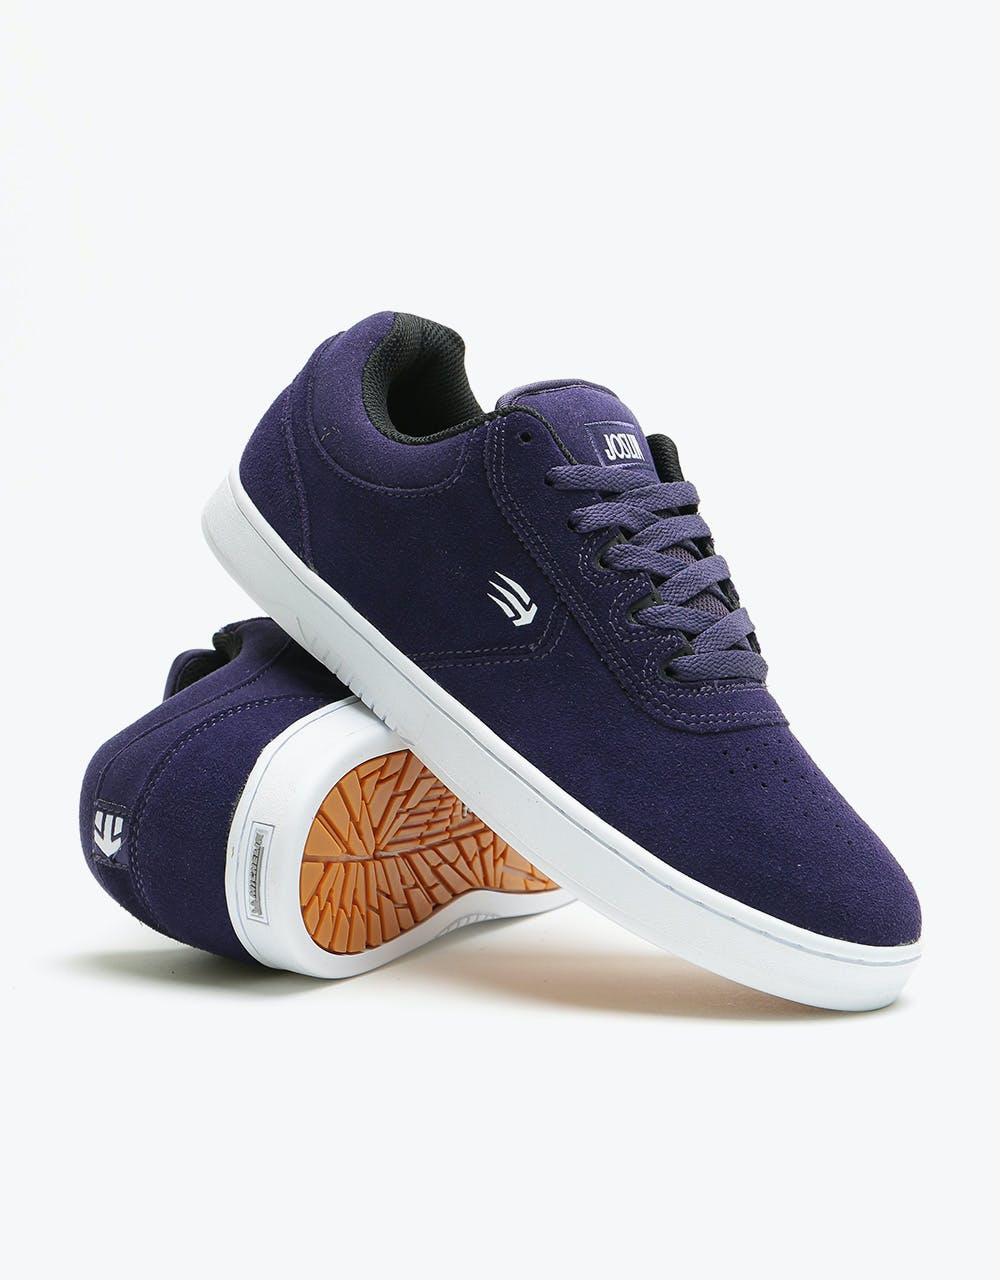 Etnies x Michelin Joslin Skate Shoes - Purple Suede